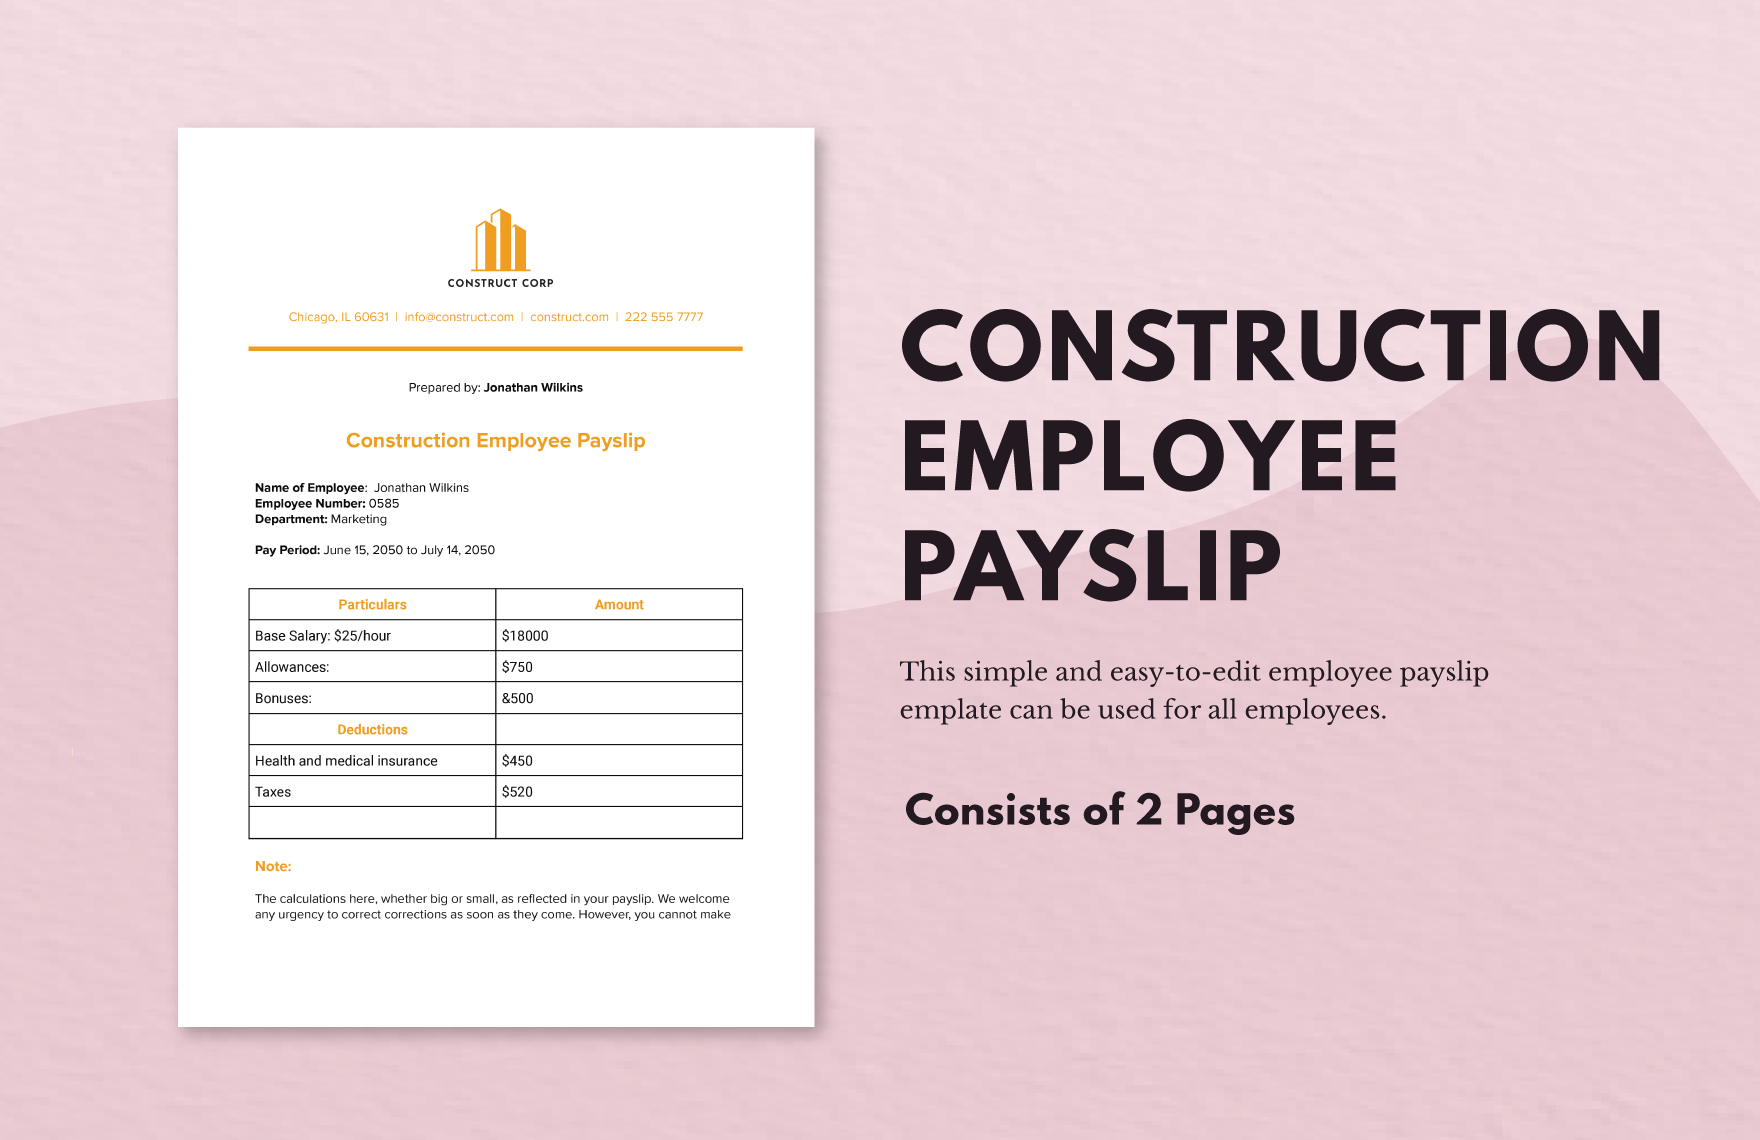 Construction Employee Payslip  in Word, Google Docs, PDF